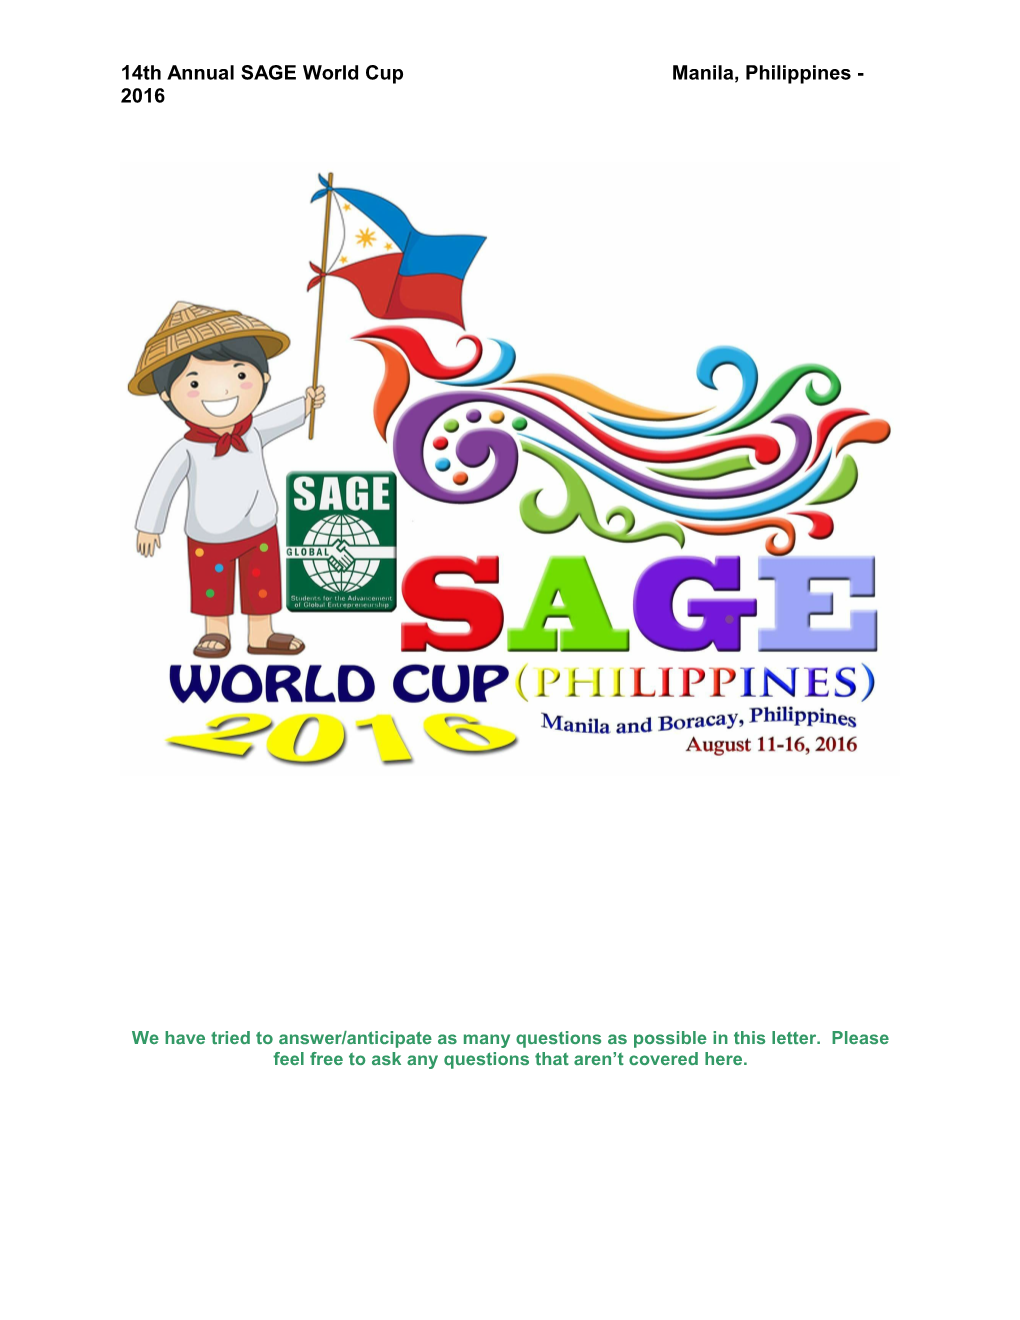 14Th Annual SAGE World Cup Manila, Philippines - 2016